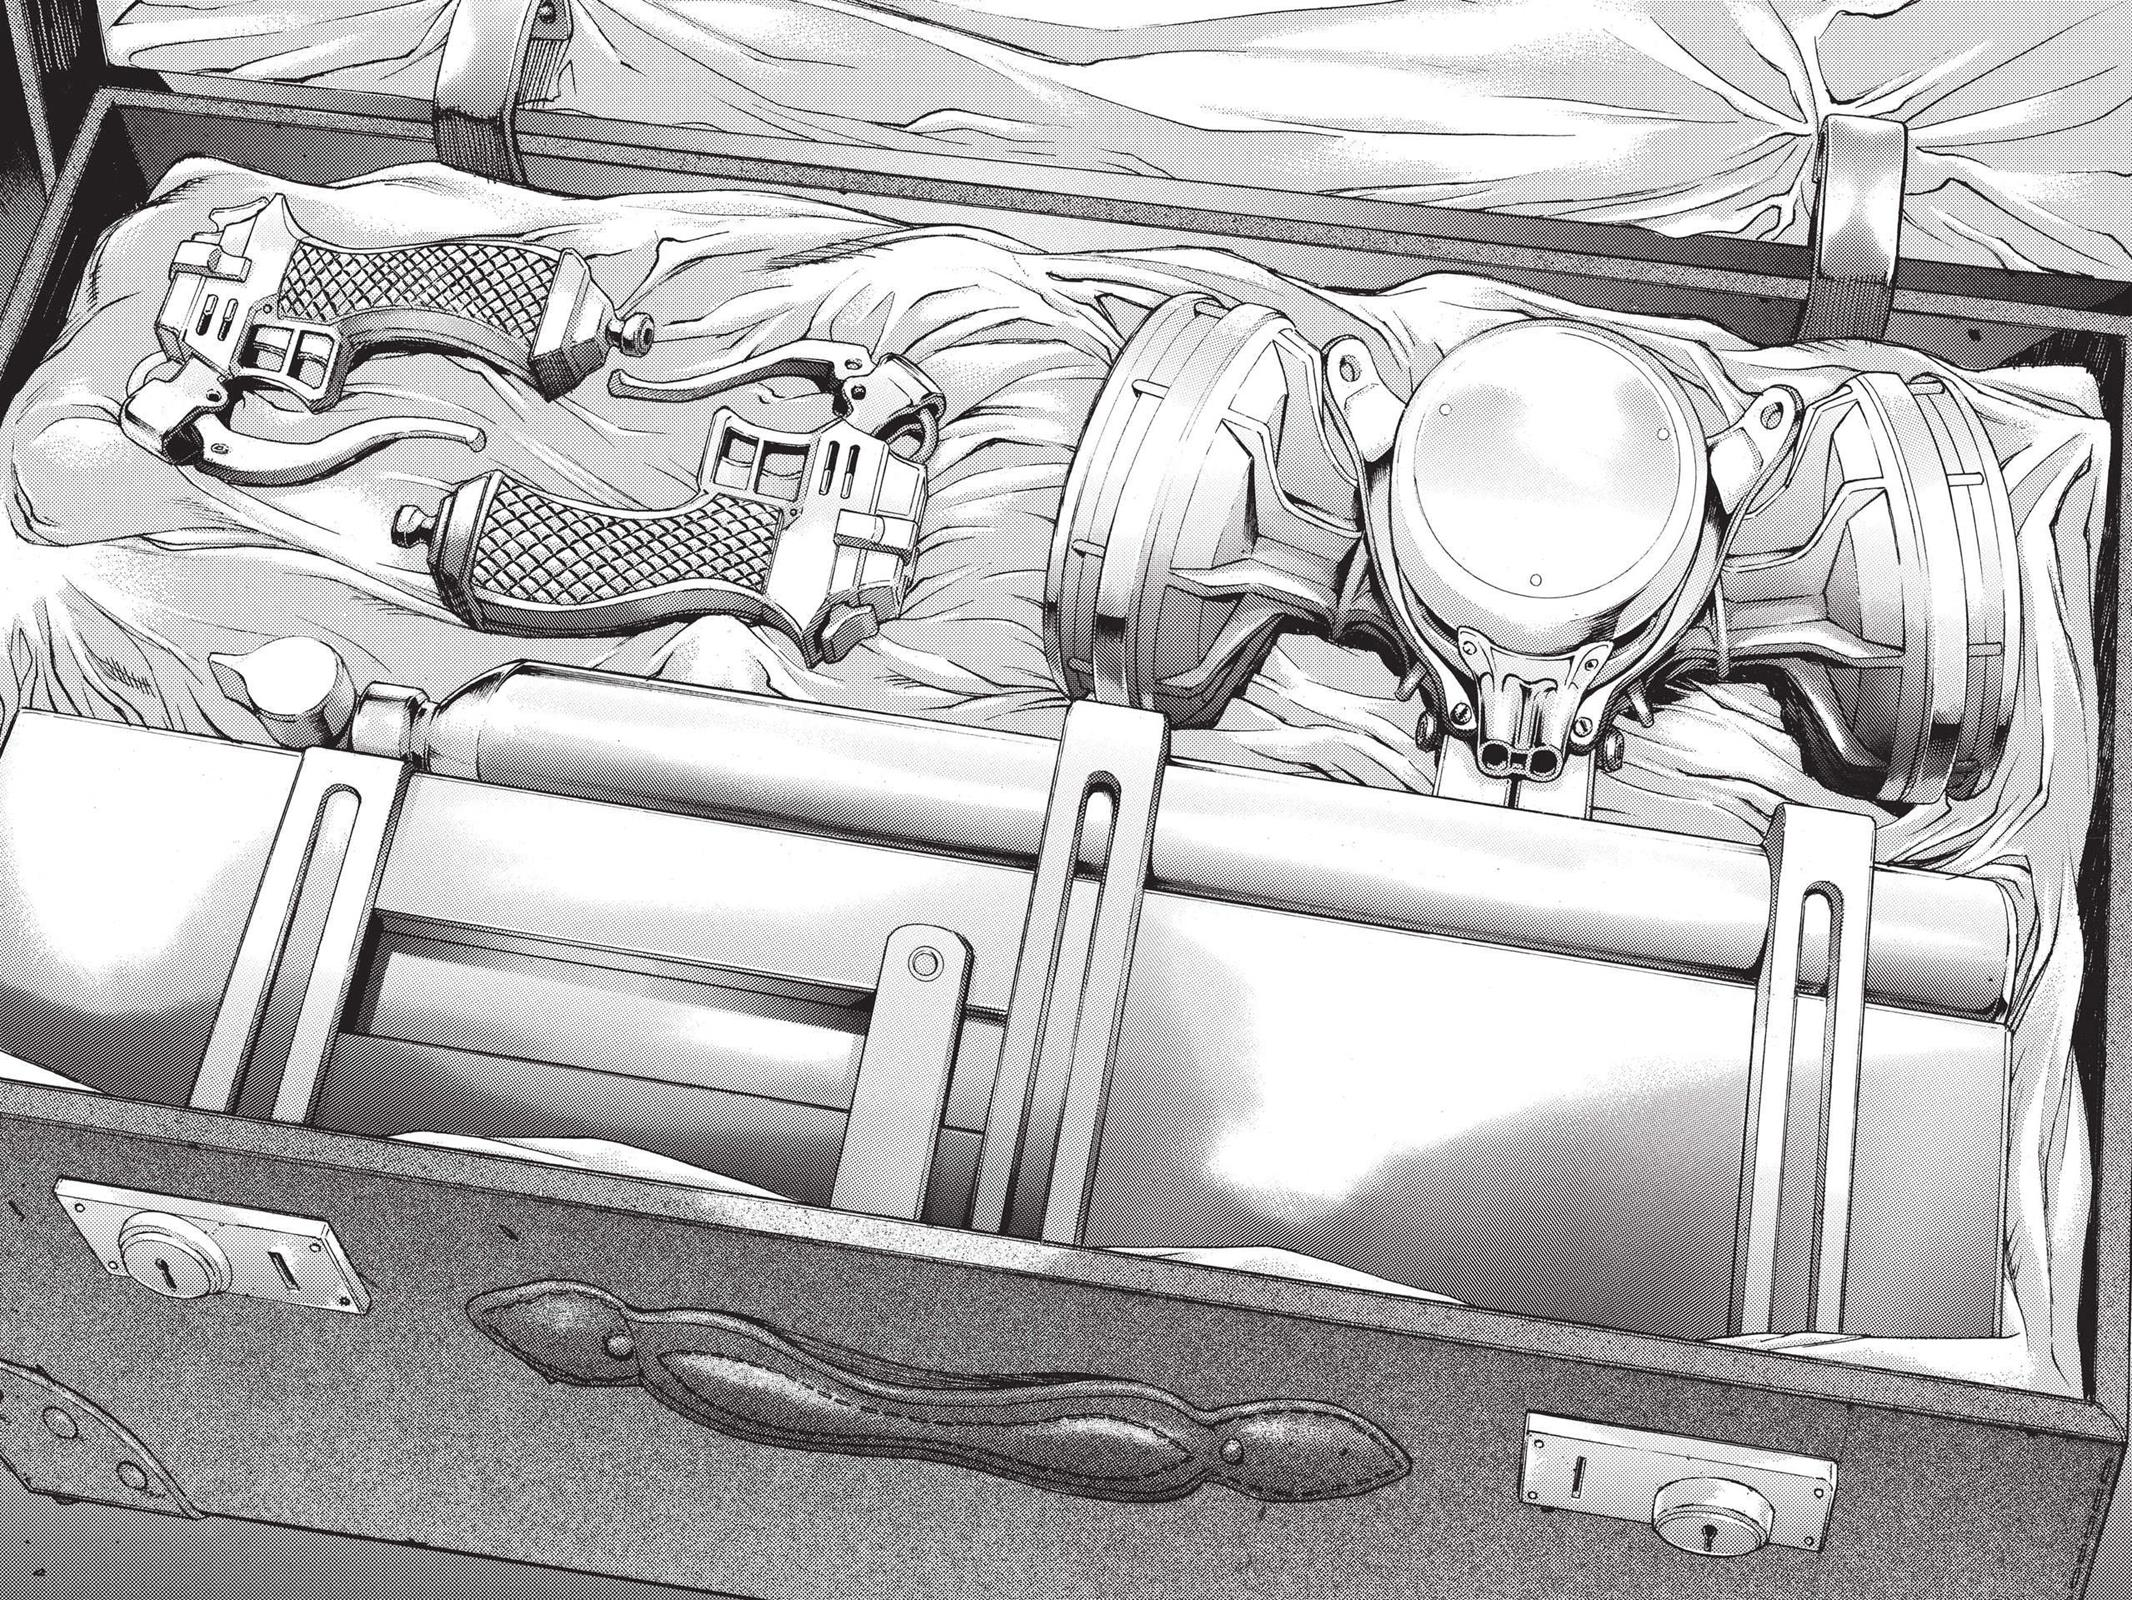 Attack on Titan: Before the Fall (Manga), Attack on Titan Wiki